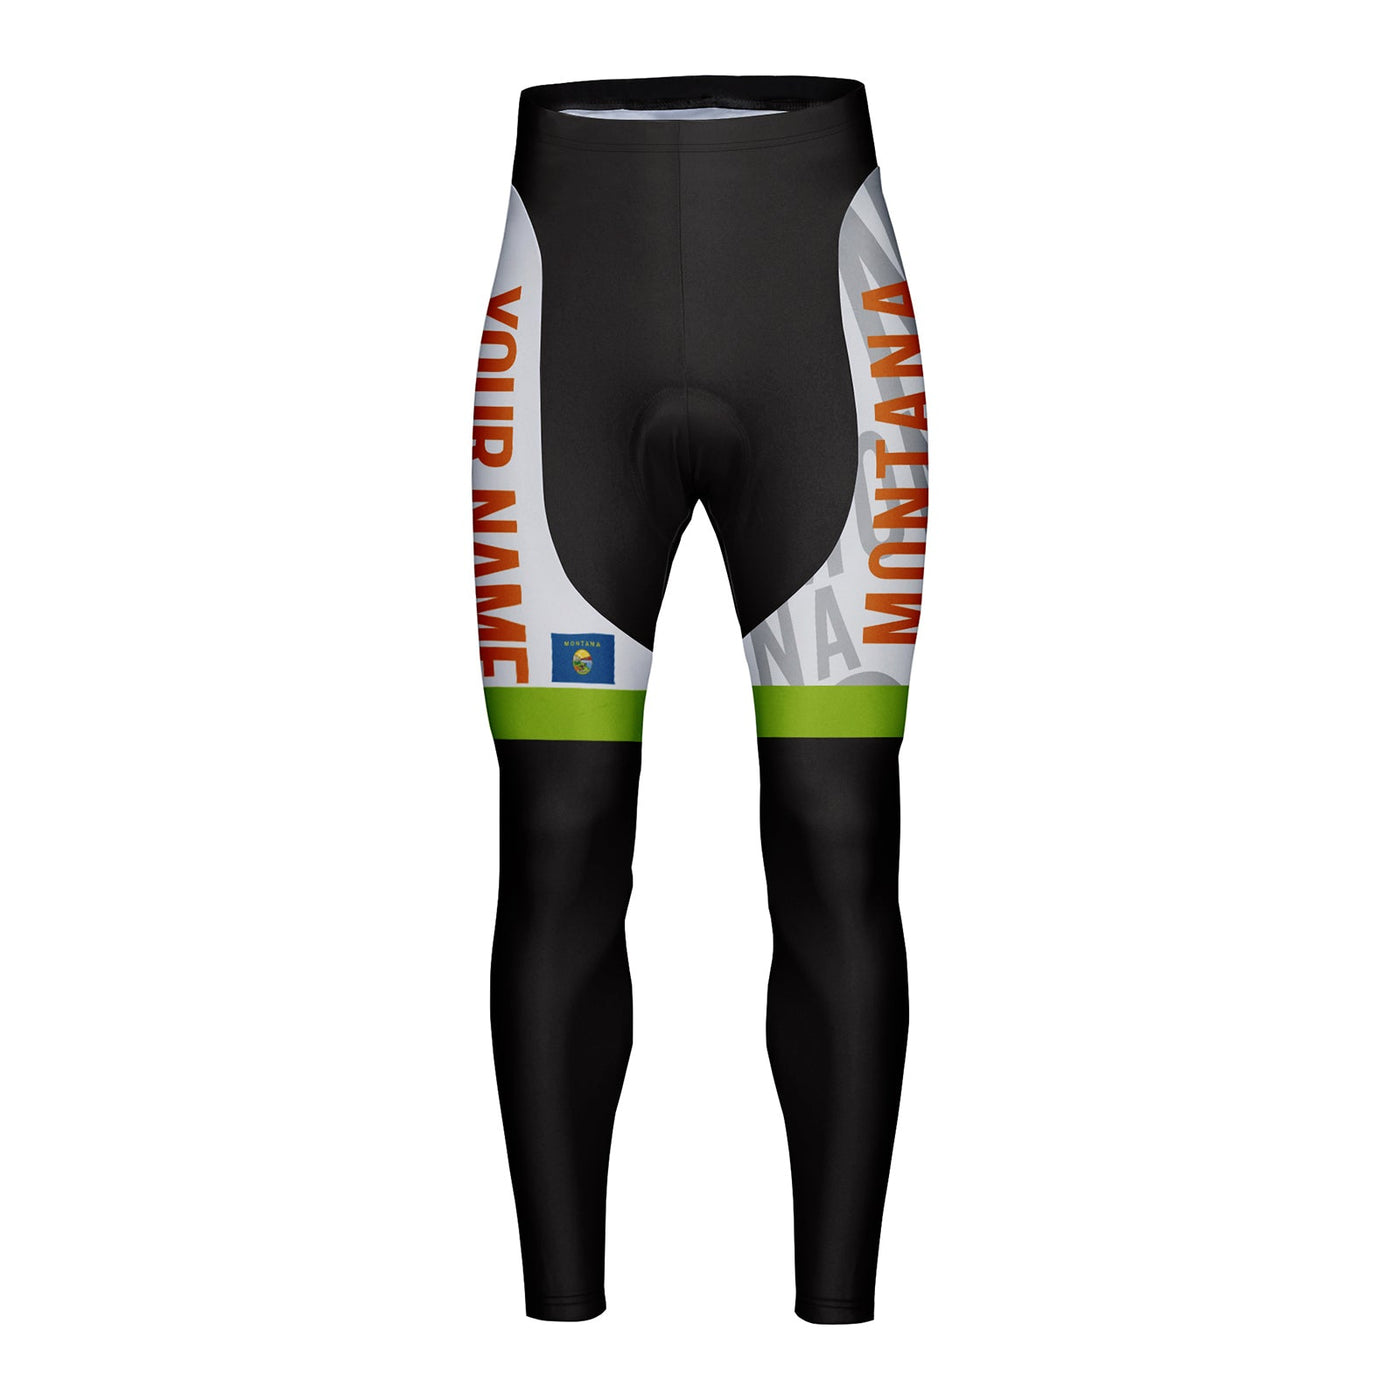 Customized Montana Unisex Thermal Fleece Cycling Tights Long Pants